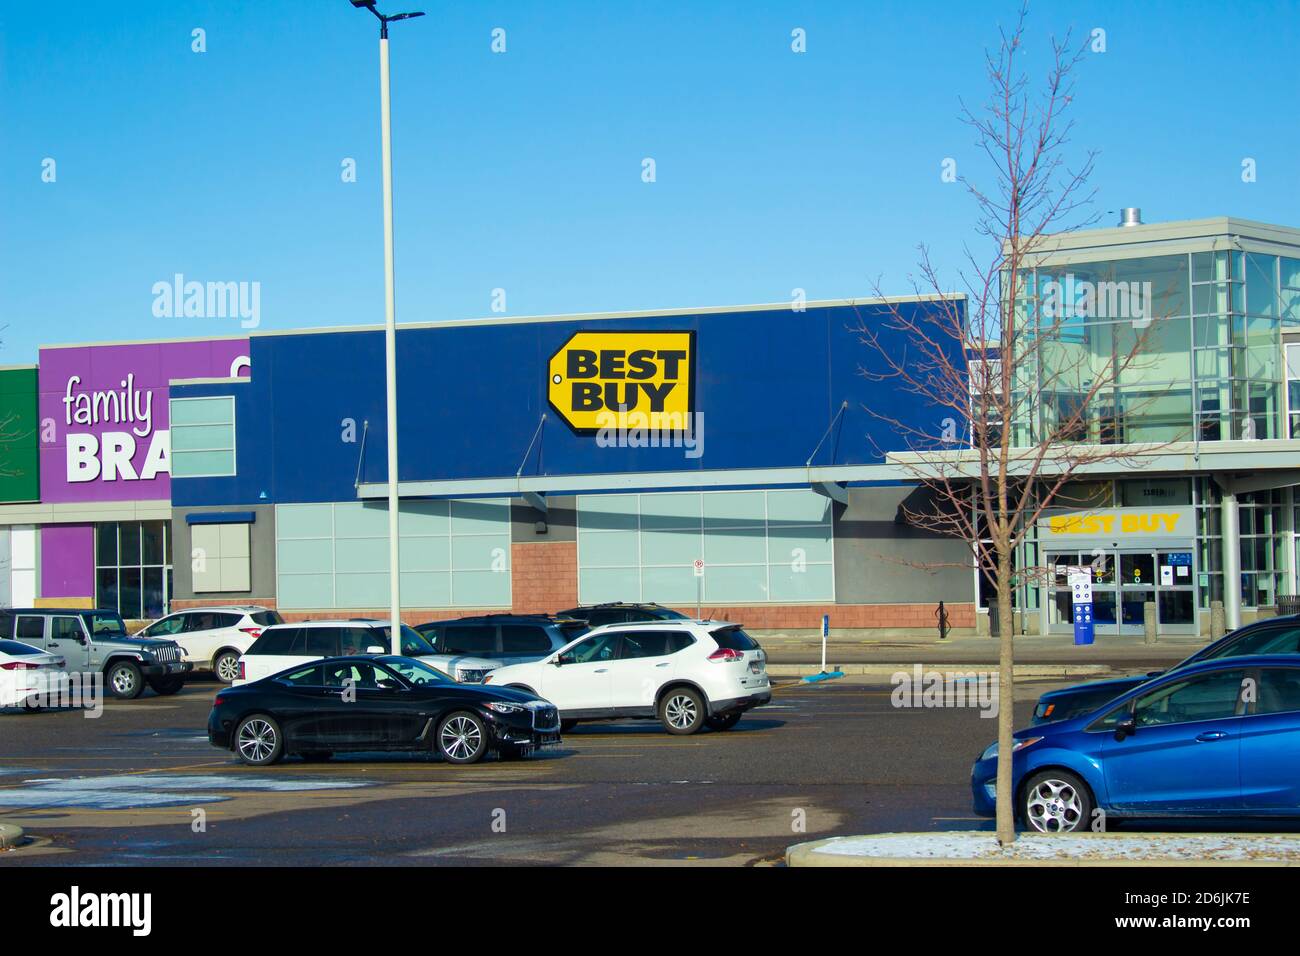 Calgary Alberta, Canada. Oct 17, 2020. Best Buy is an American multinational consumer electronics retailer headquartered in Richfield, Minnesota. Stock Photo